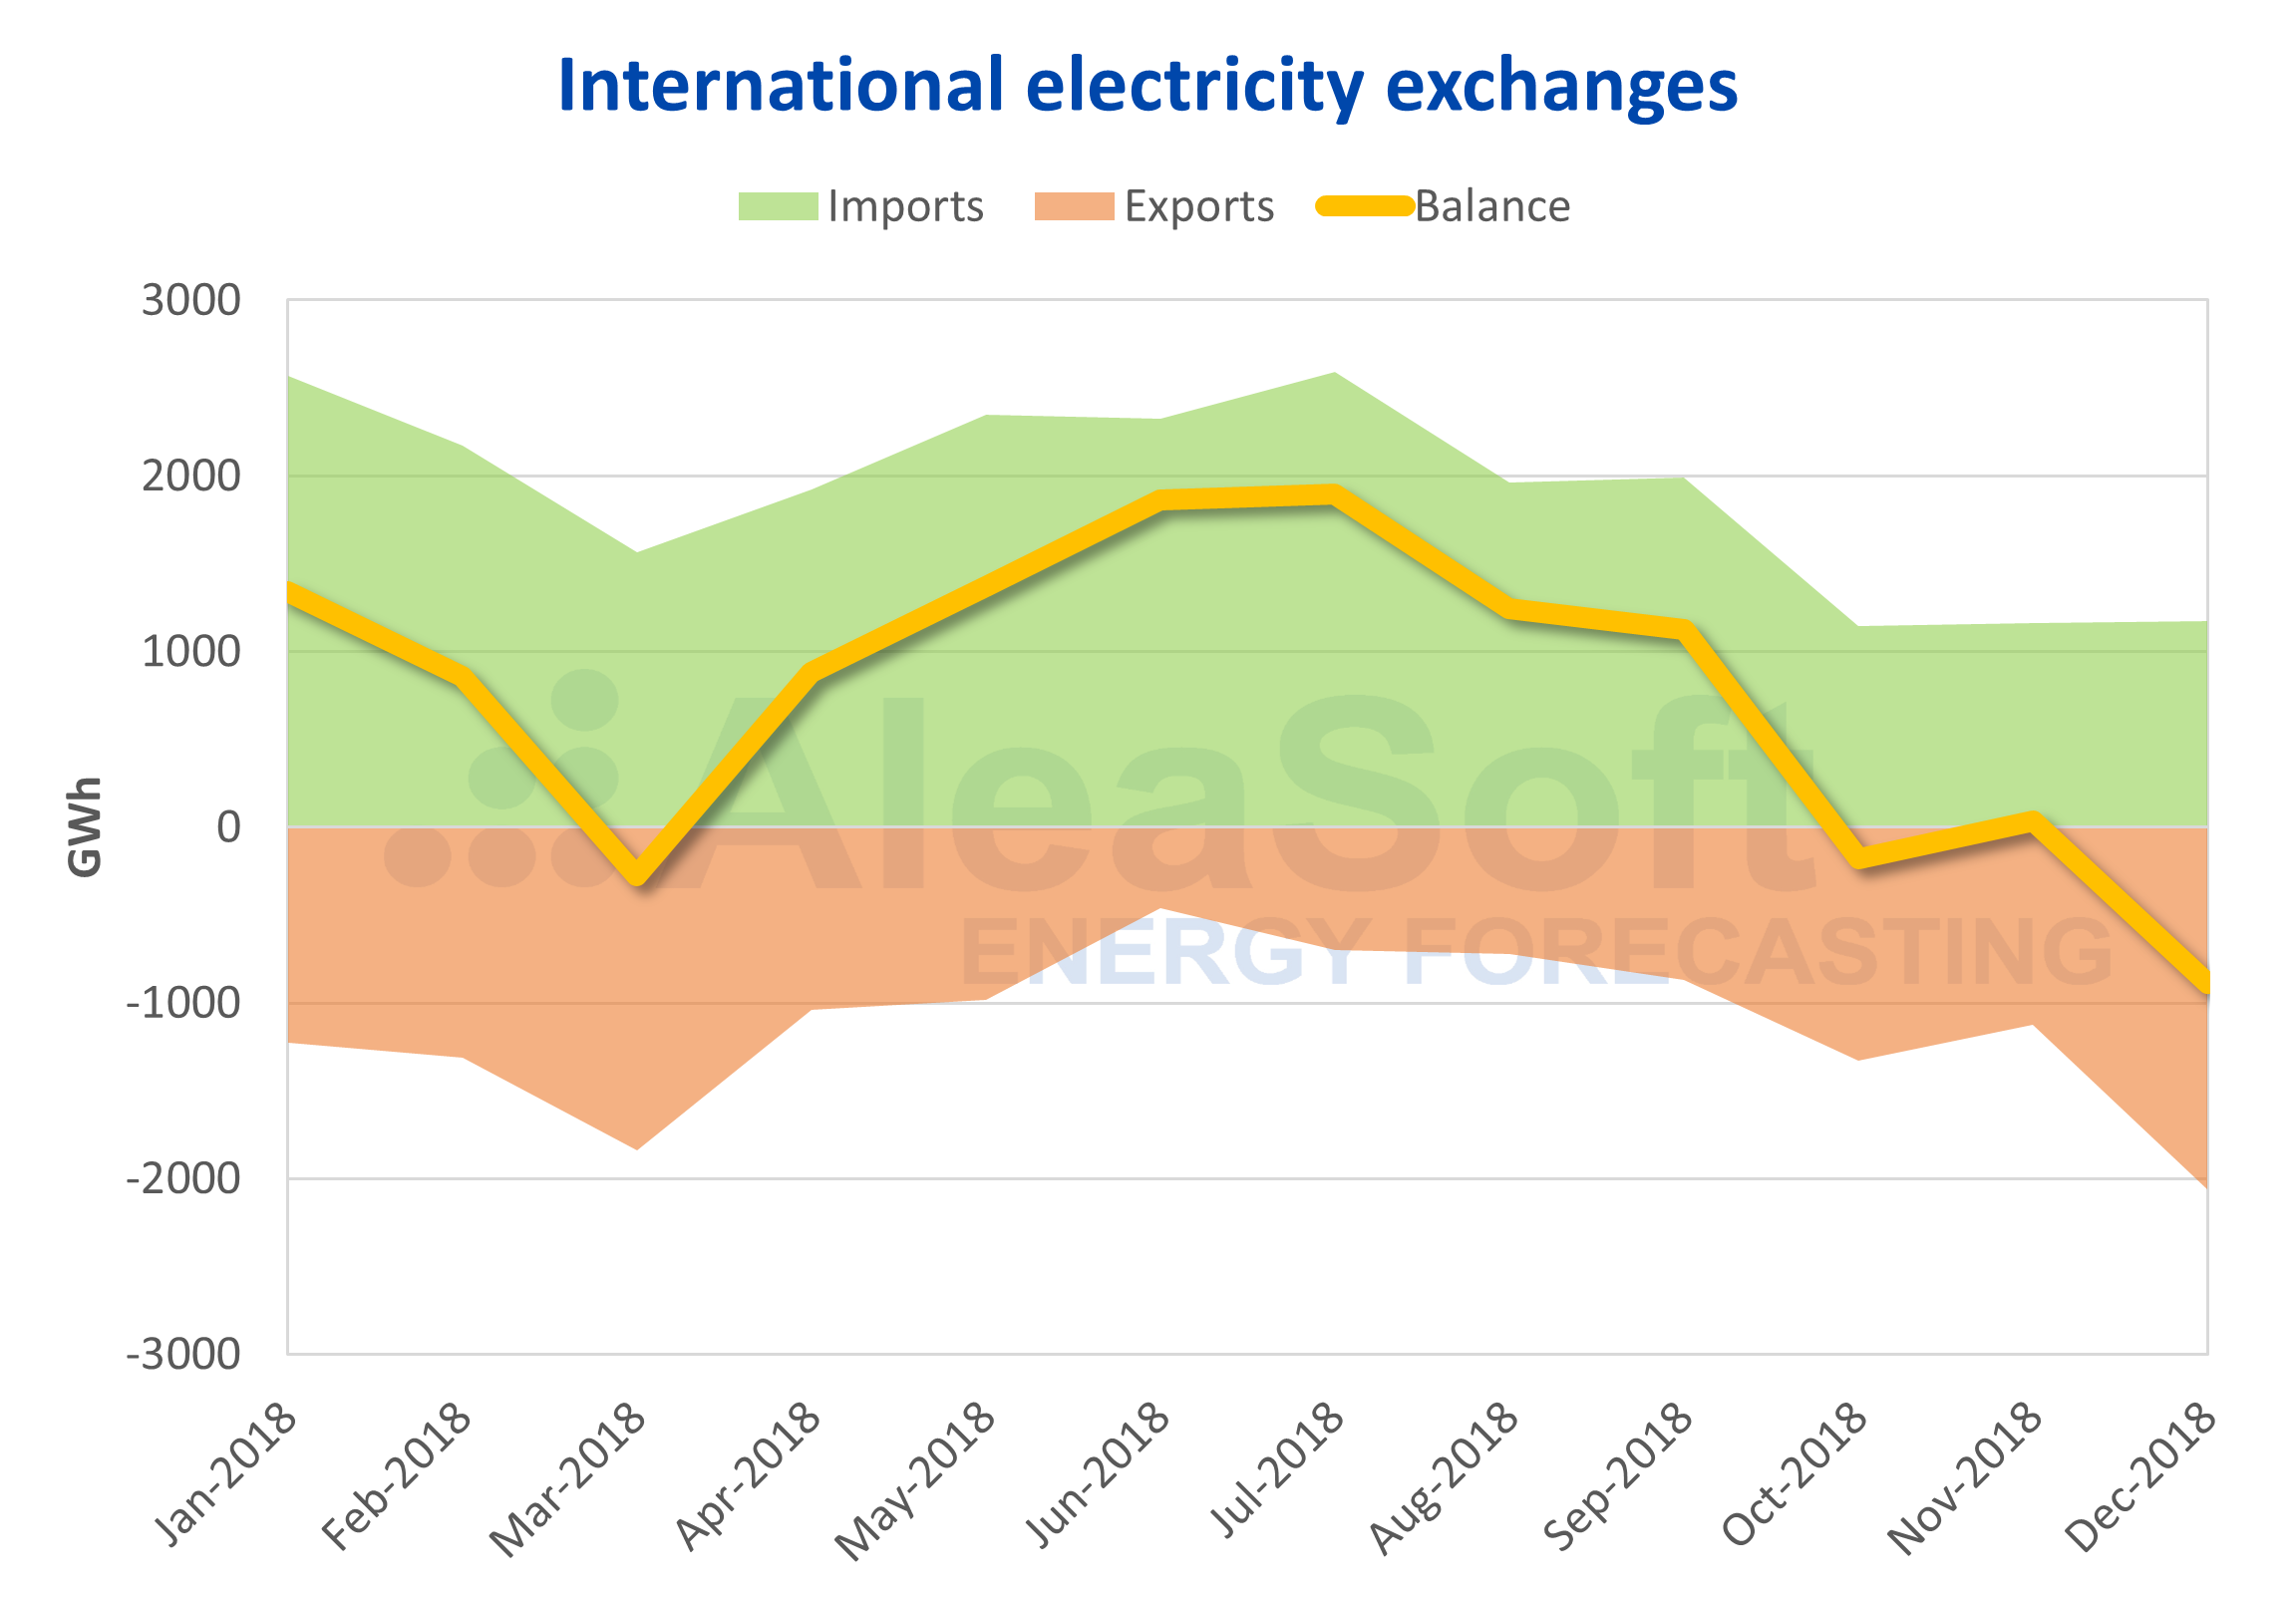 AleaSoft - International electricity exchanges